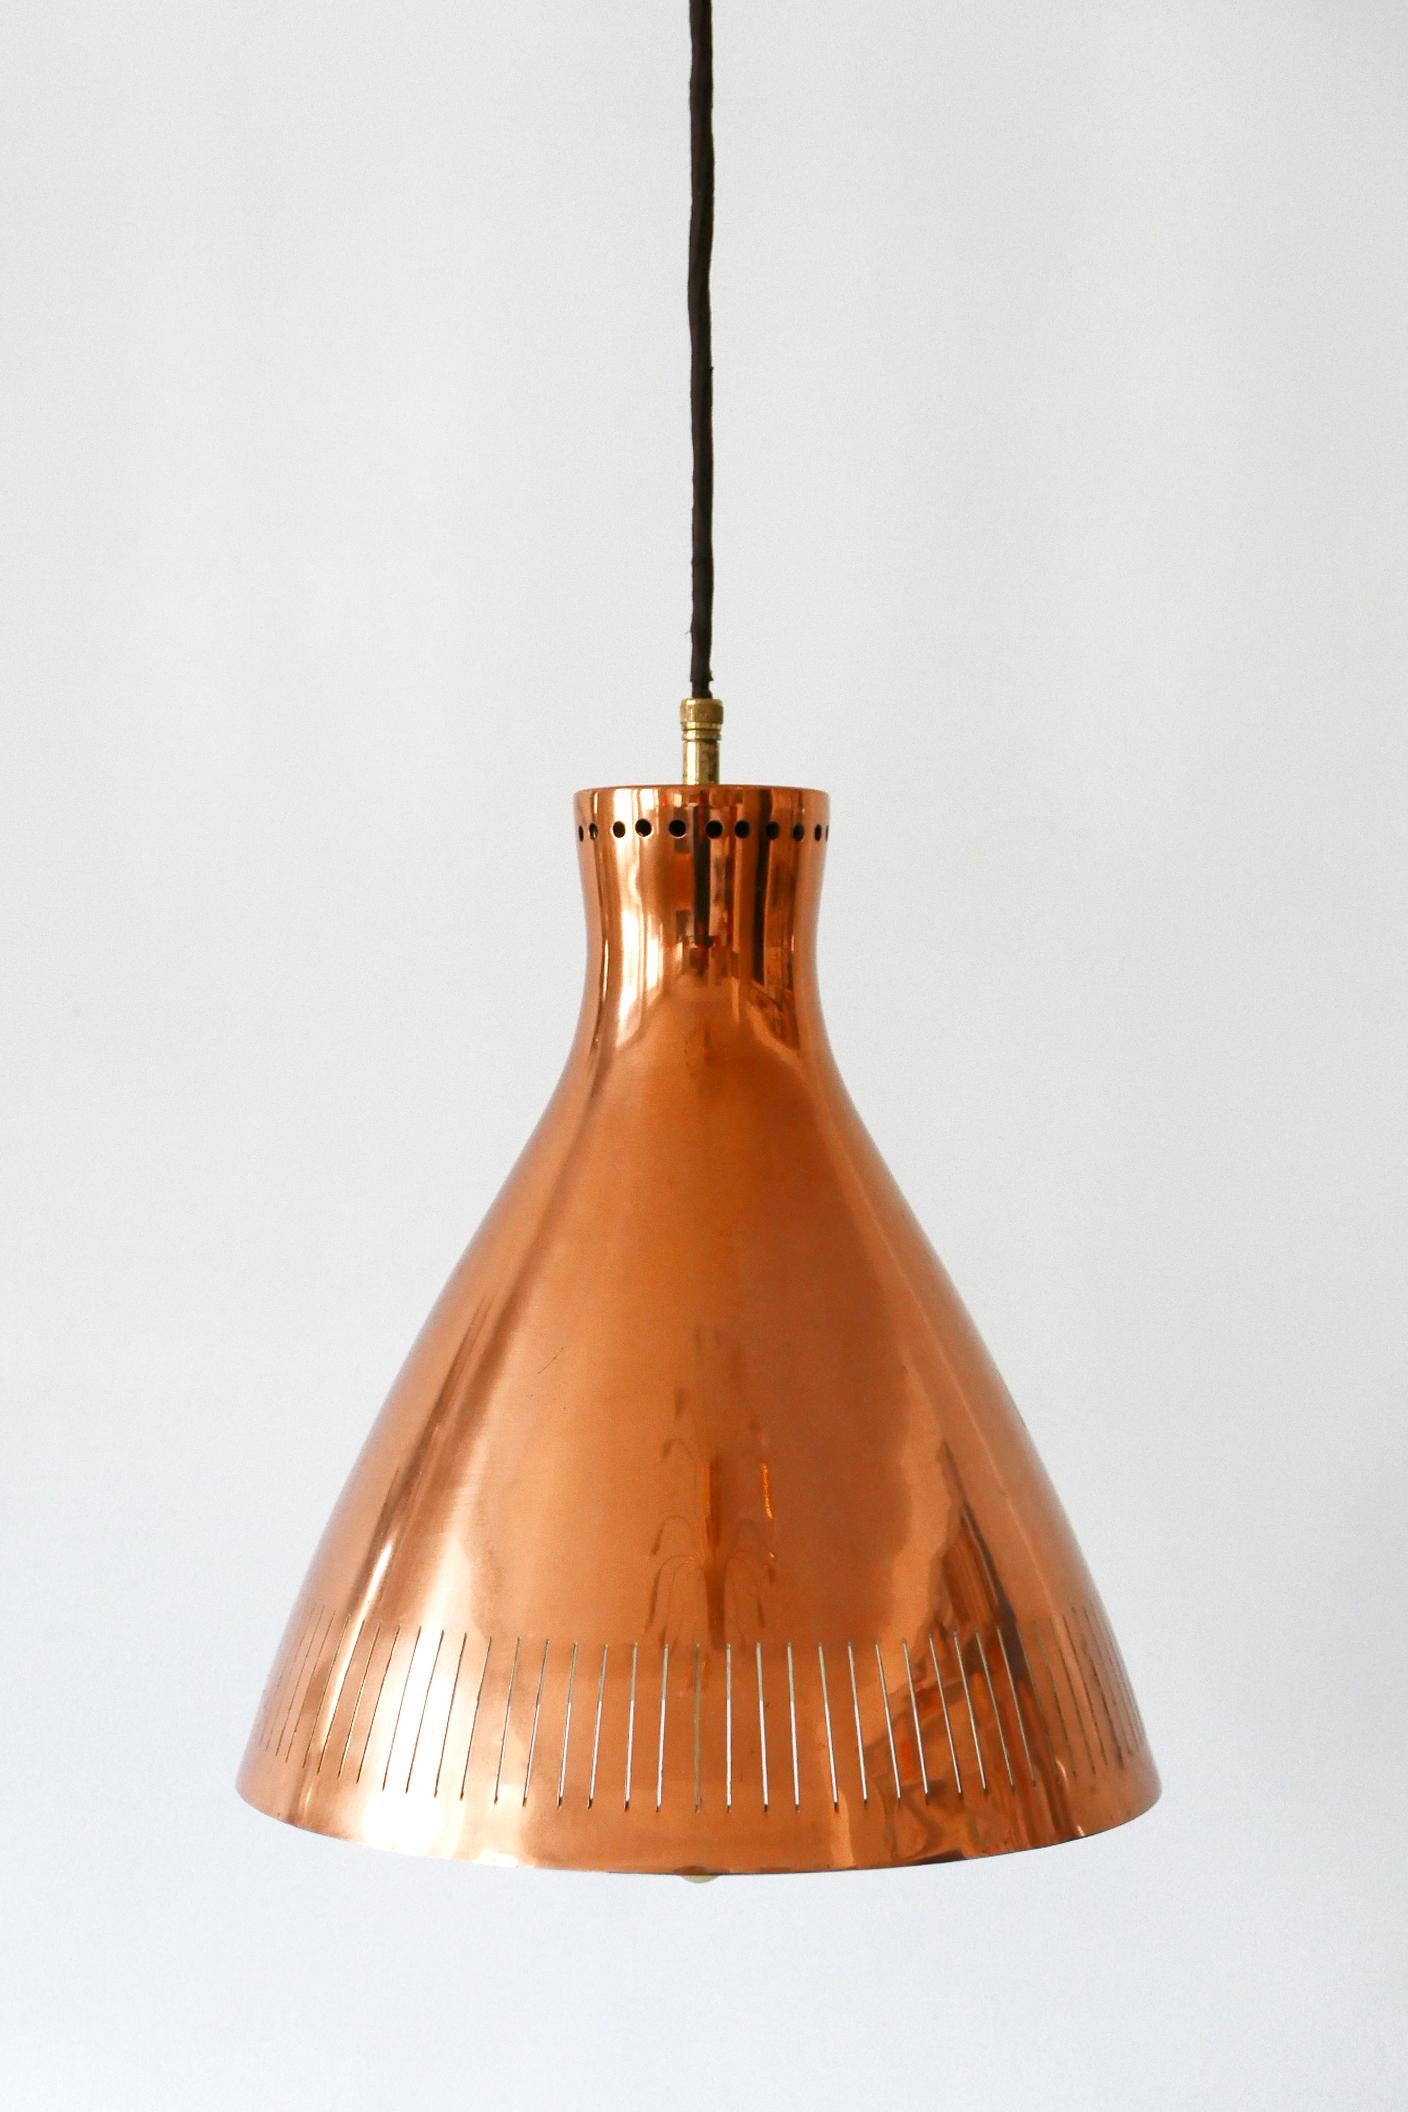 Mid-Century Modern Copper Pendant Lamp by Vereinigte Werkstätten 1960s Germany For Sale 4